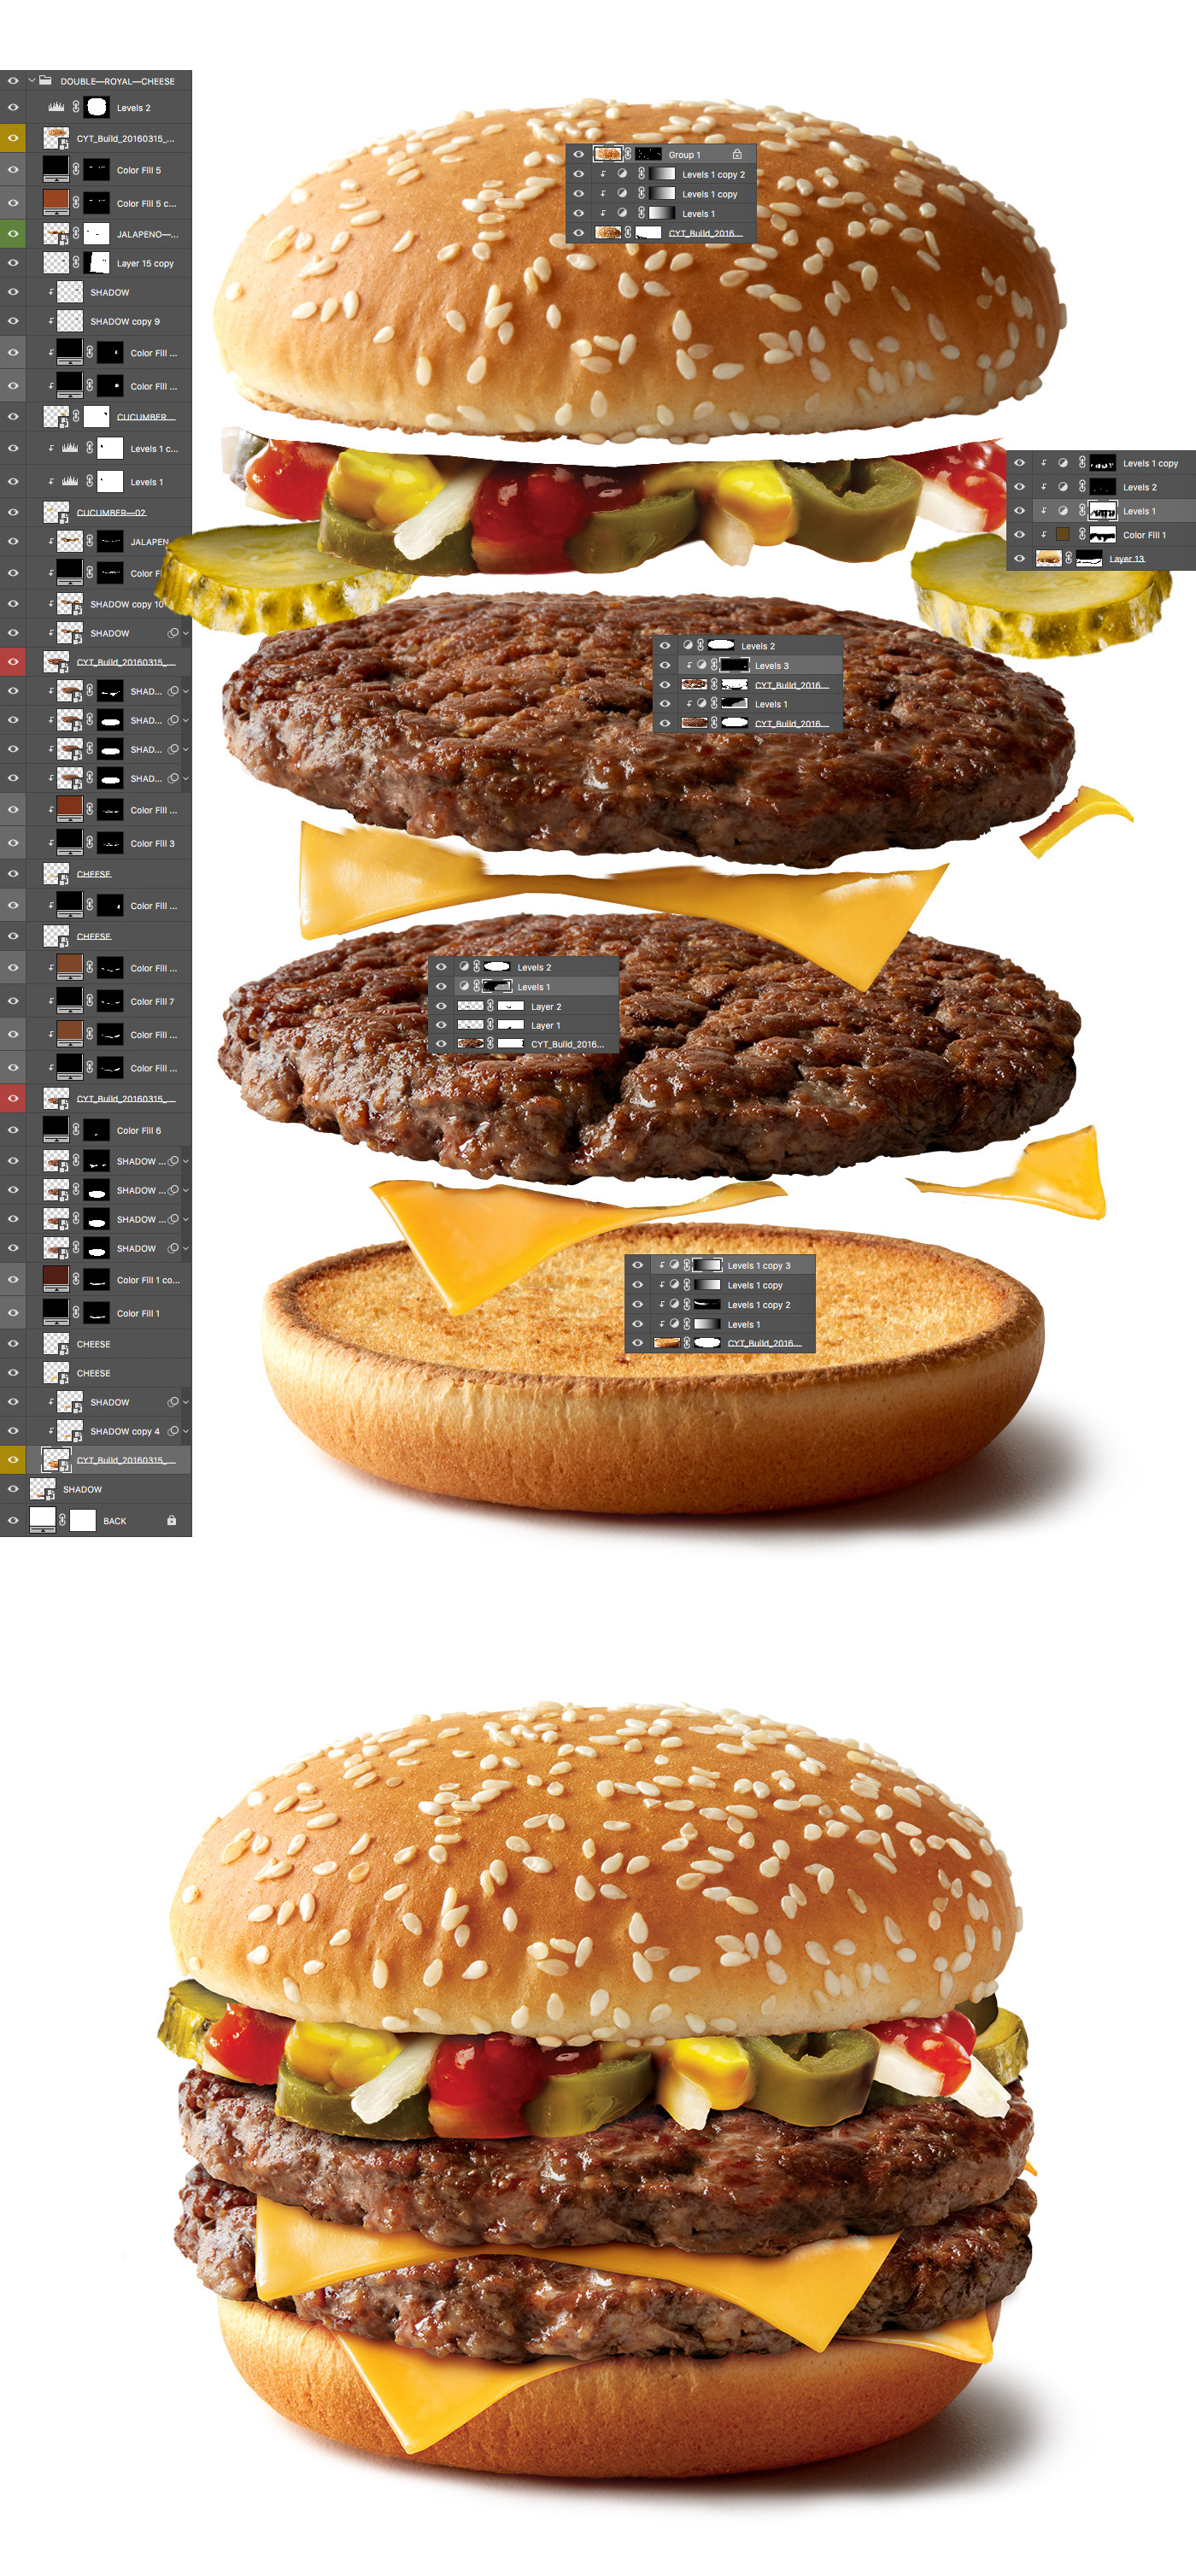 McDonalds burger sandwich spicy mcspicy Reto retouching  fire logo